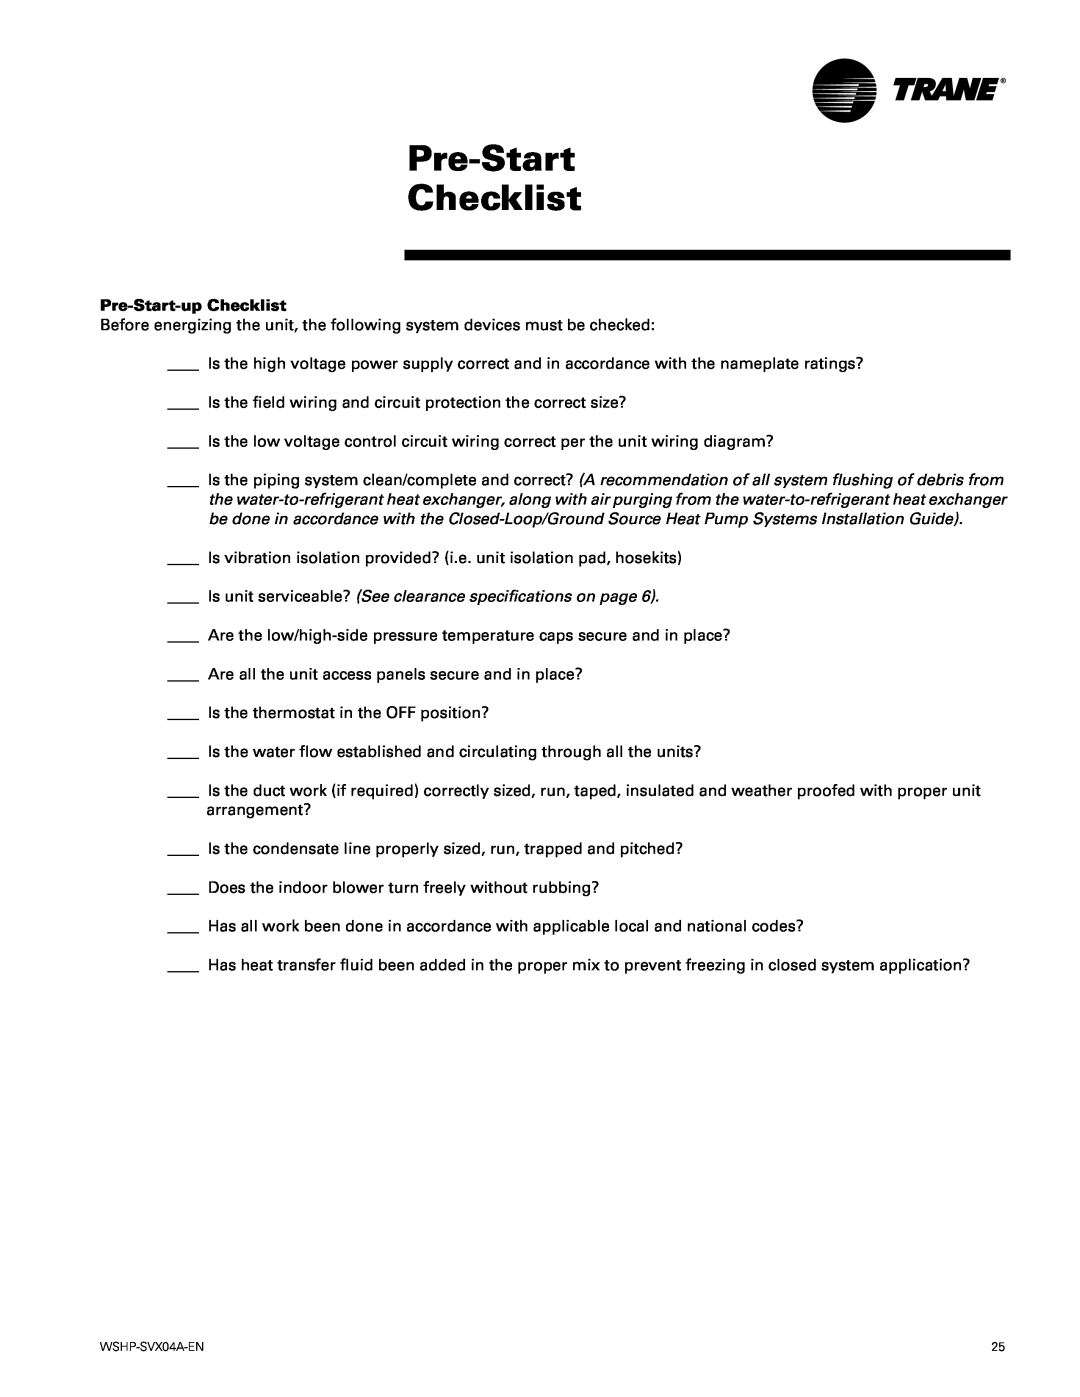 Trane WPVJ, WPHF manual Pre-Start Checklist, Pre-Start-upChecklist 